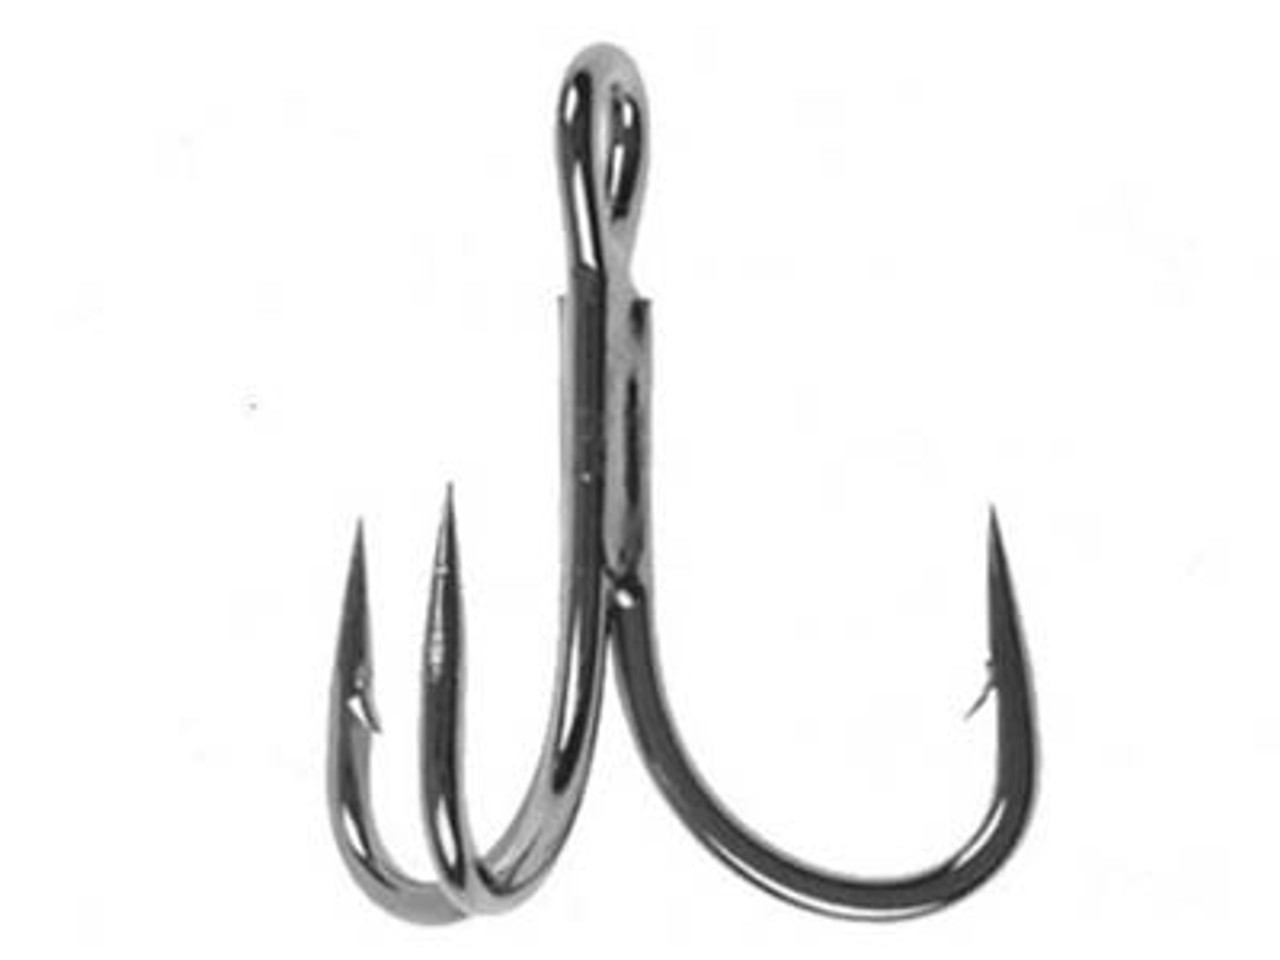 Owner Stinger Siwash Hooks Size #2/0